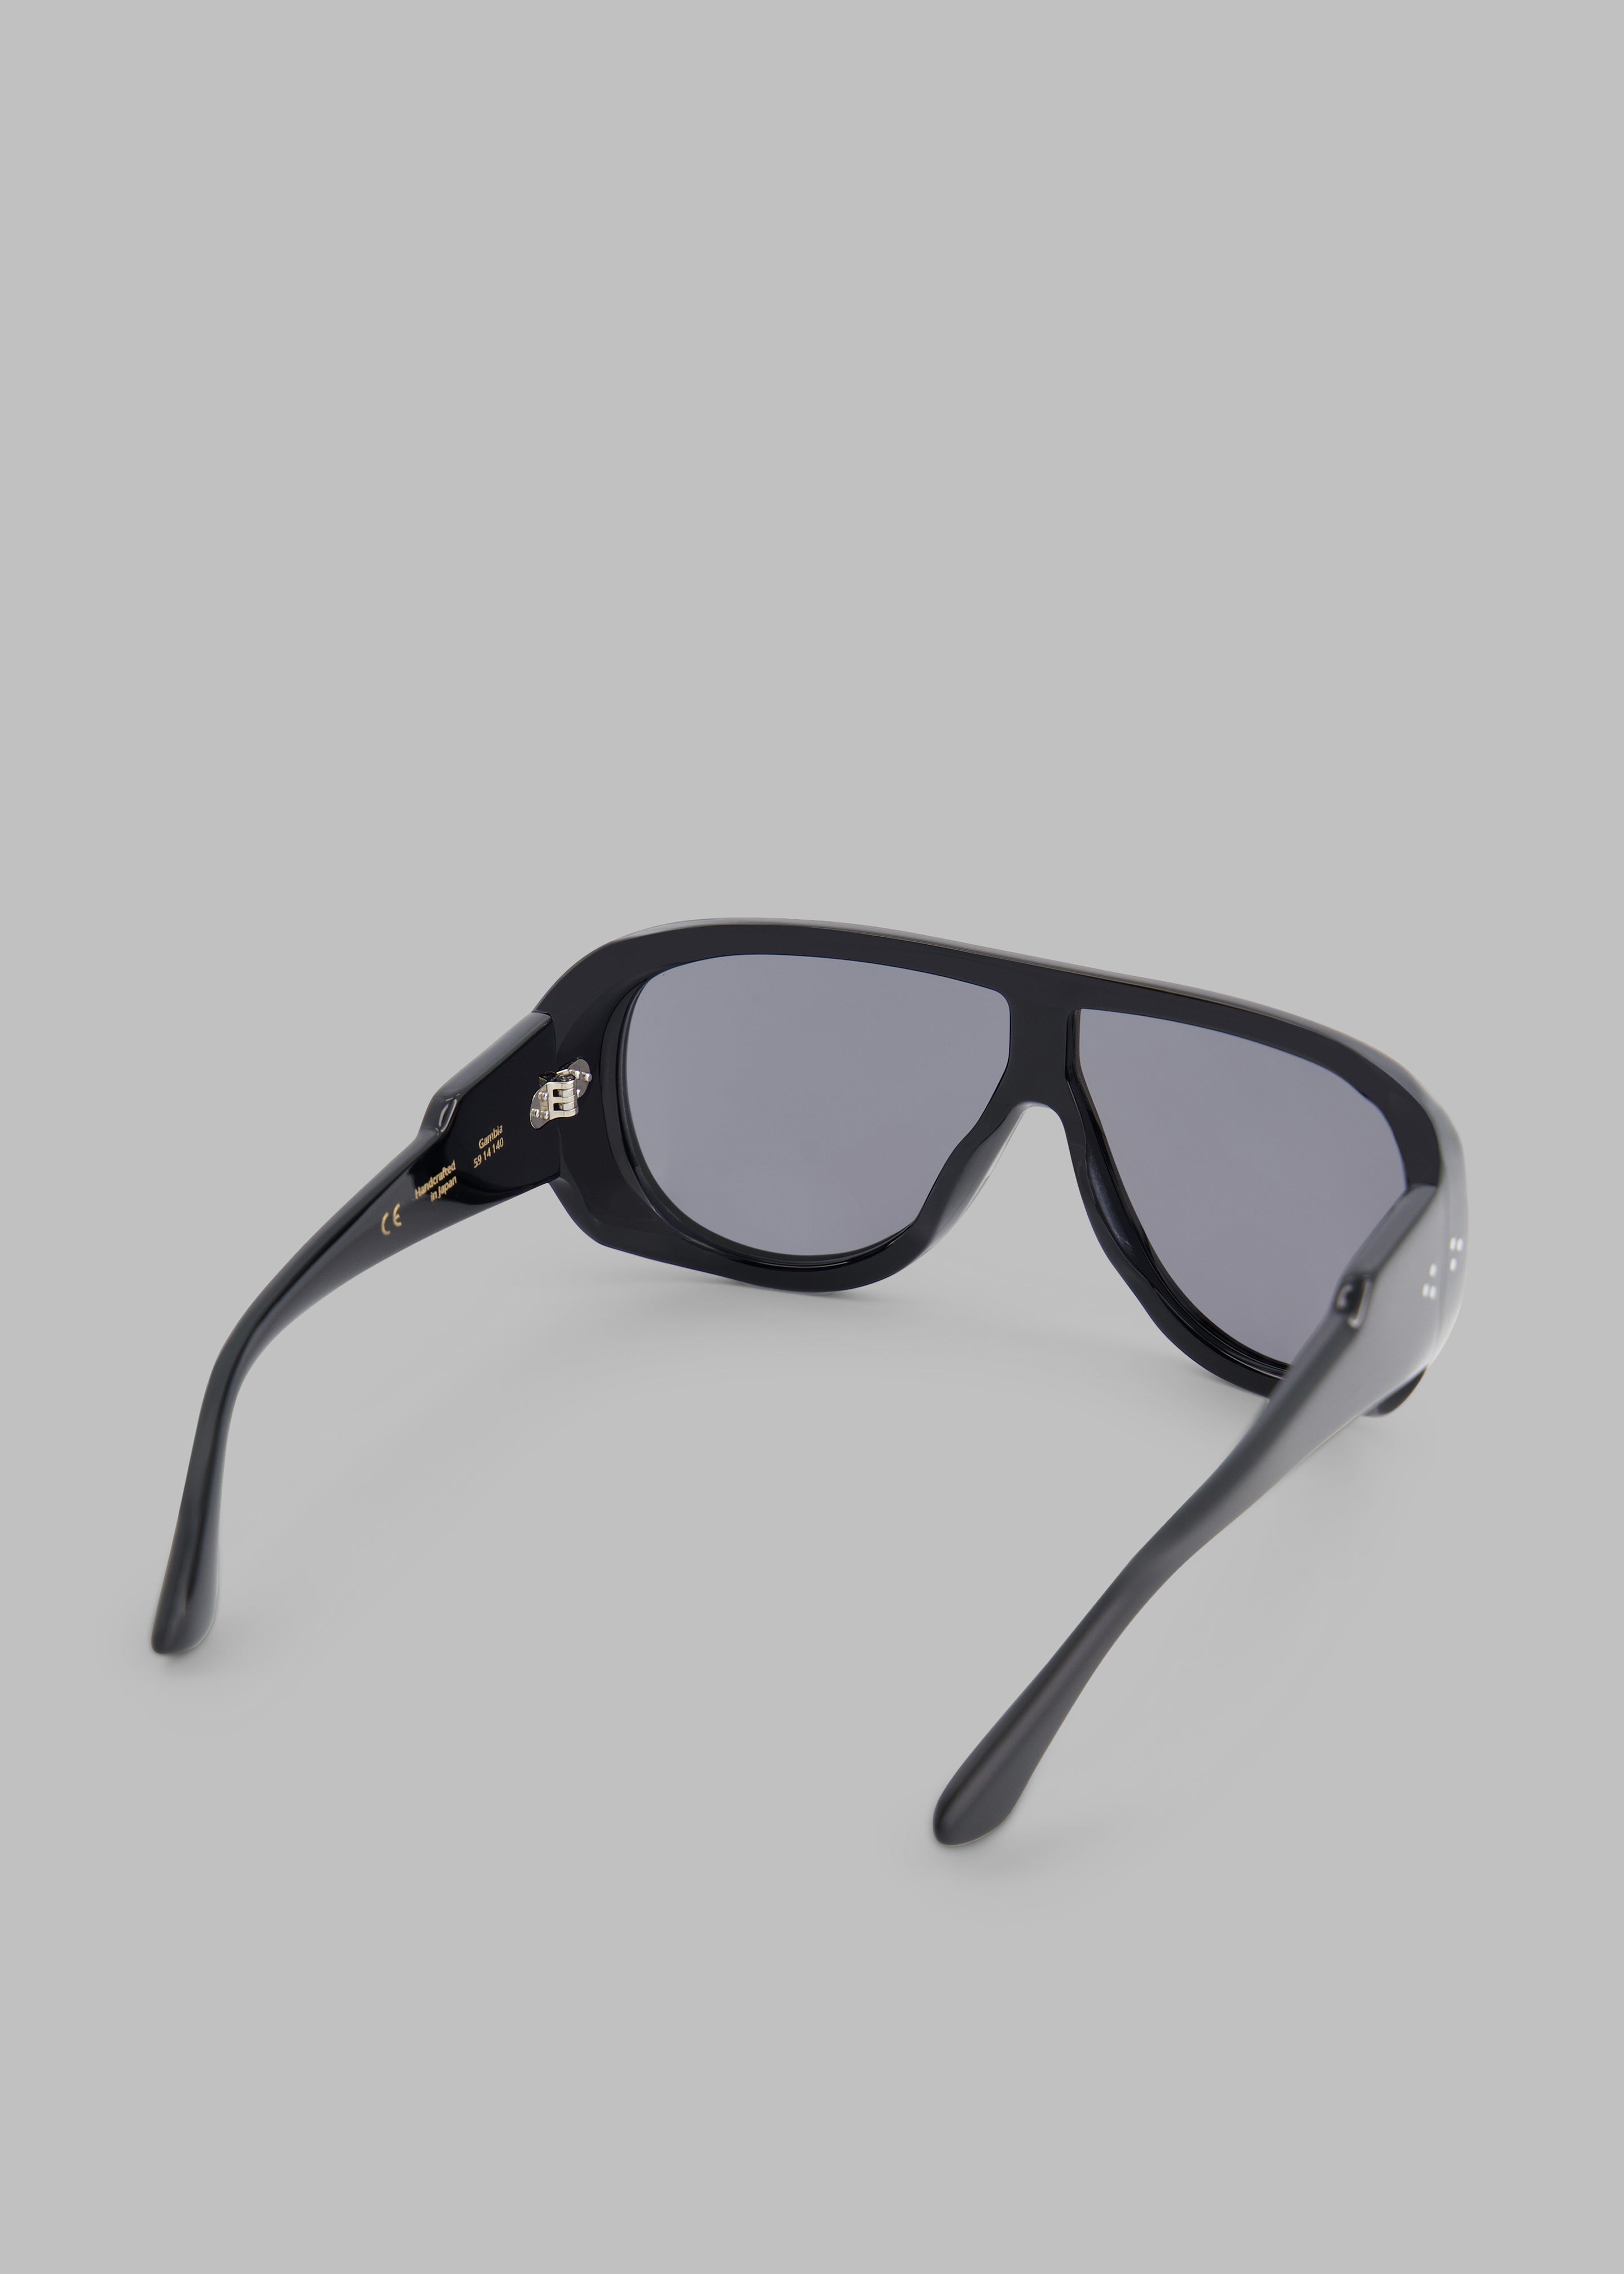 Port Tanger Gambia Sunglasses - Black Acetate/Black Lens - 11